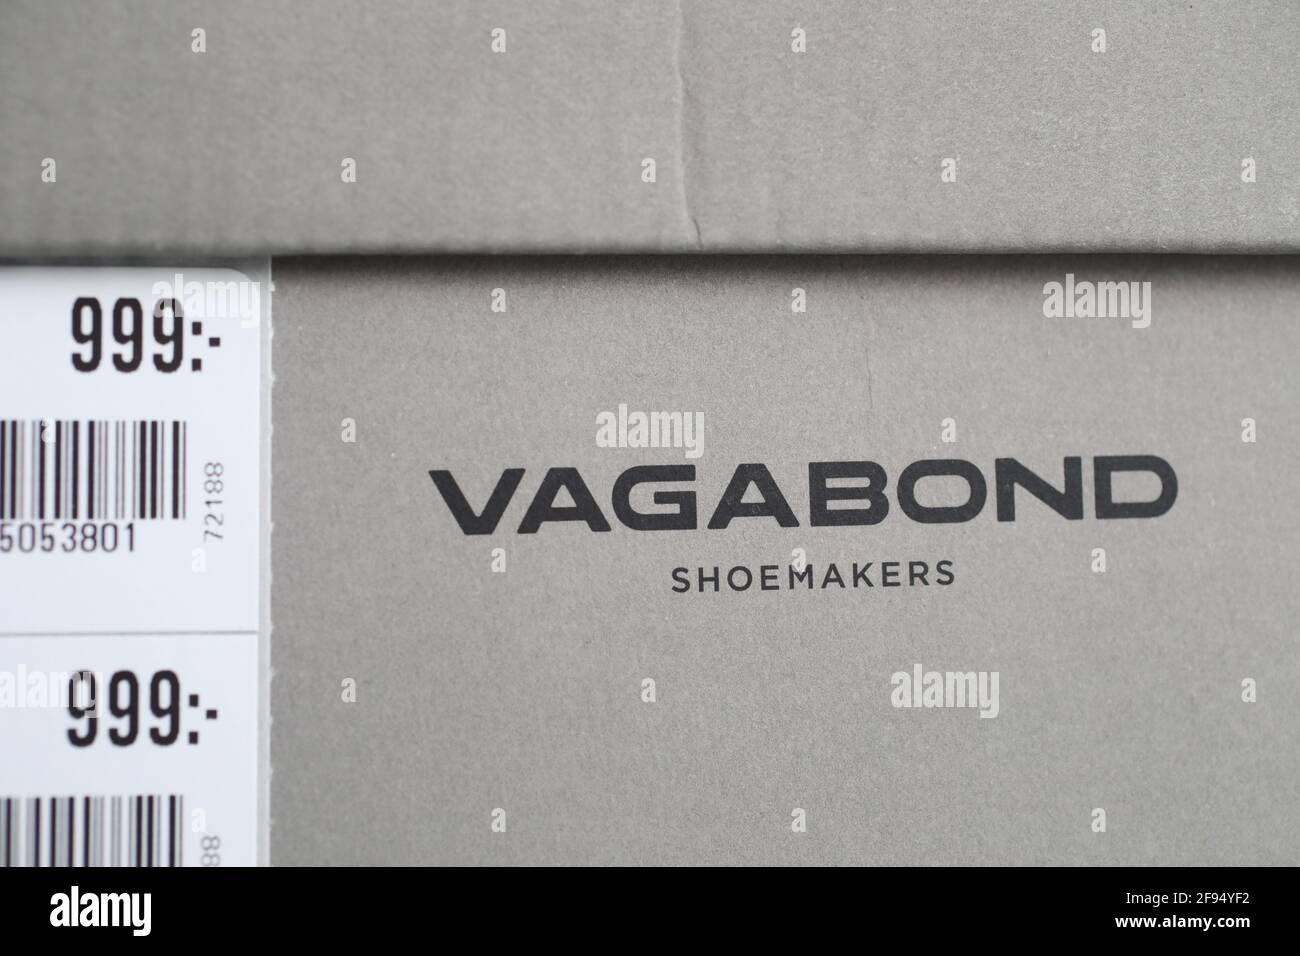 Vagabond, shoe company Stock Photo - Alamy